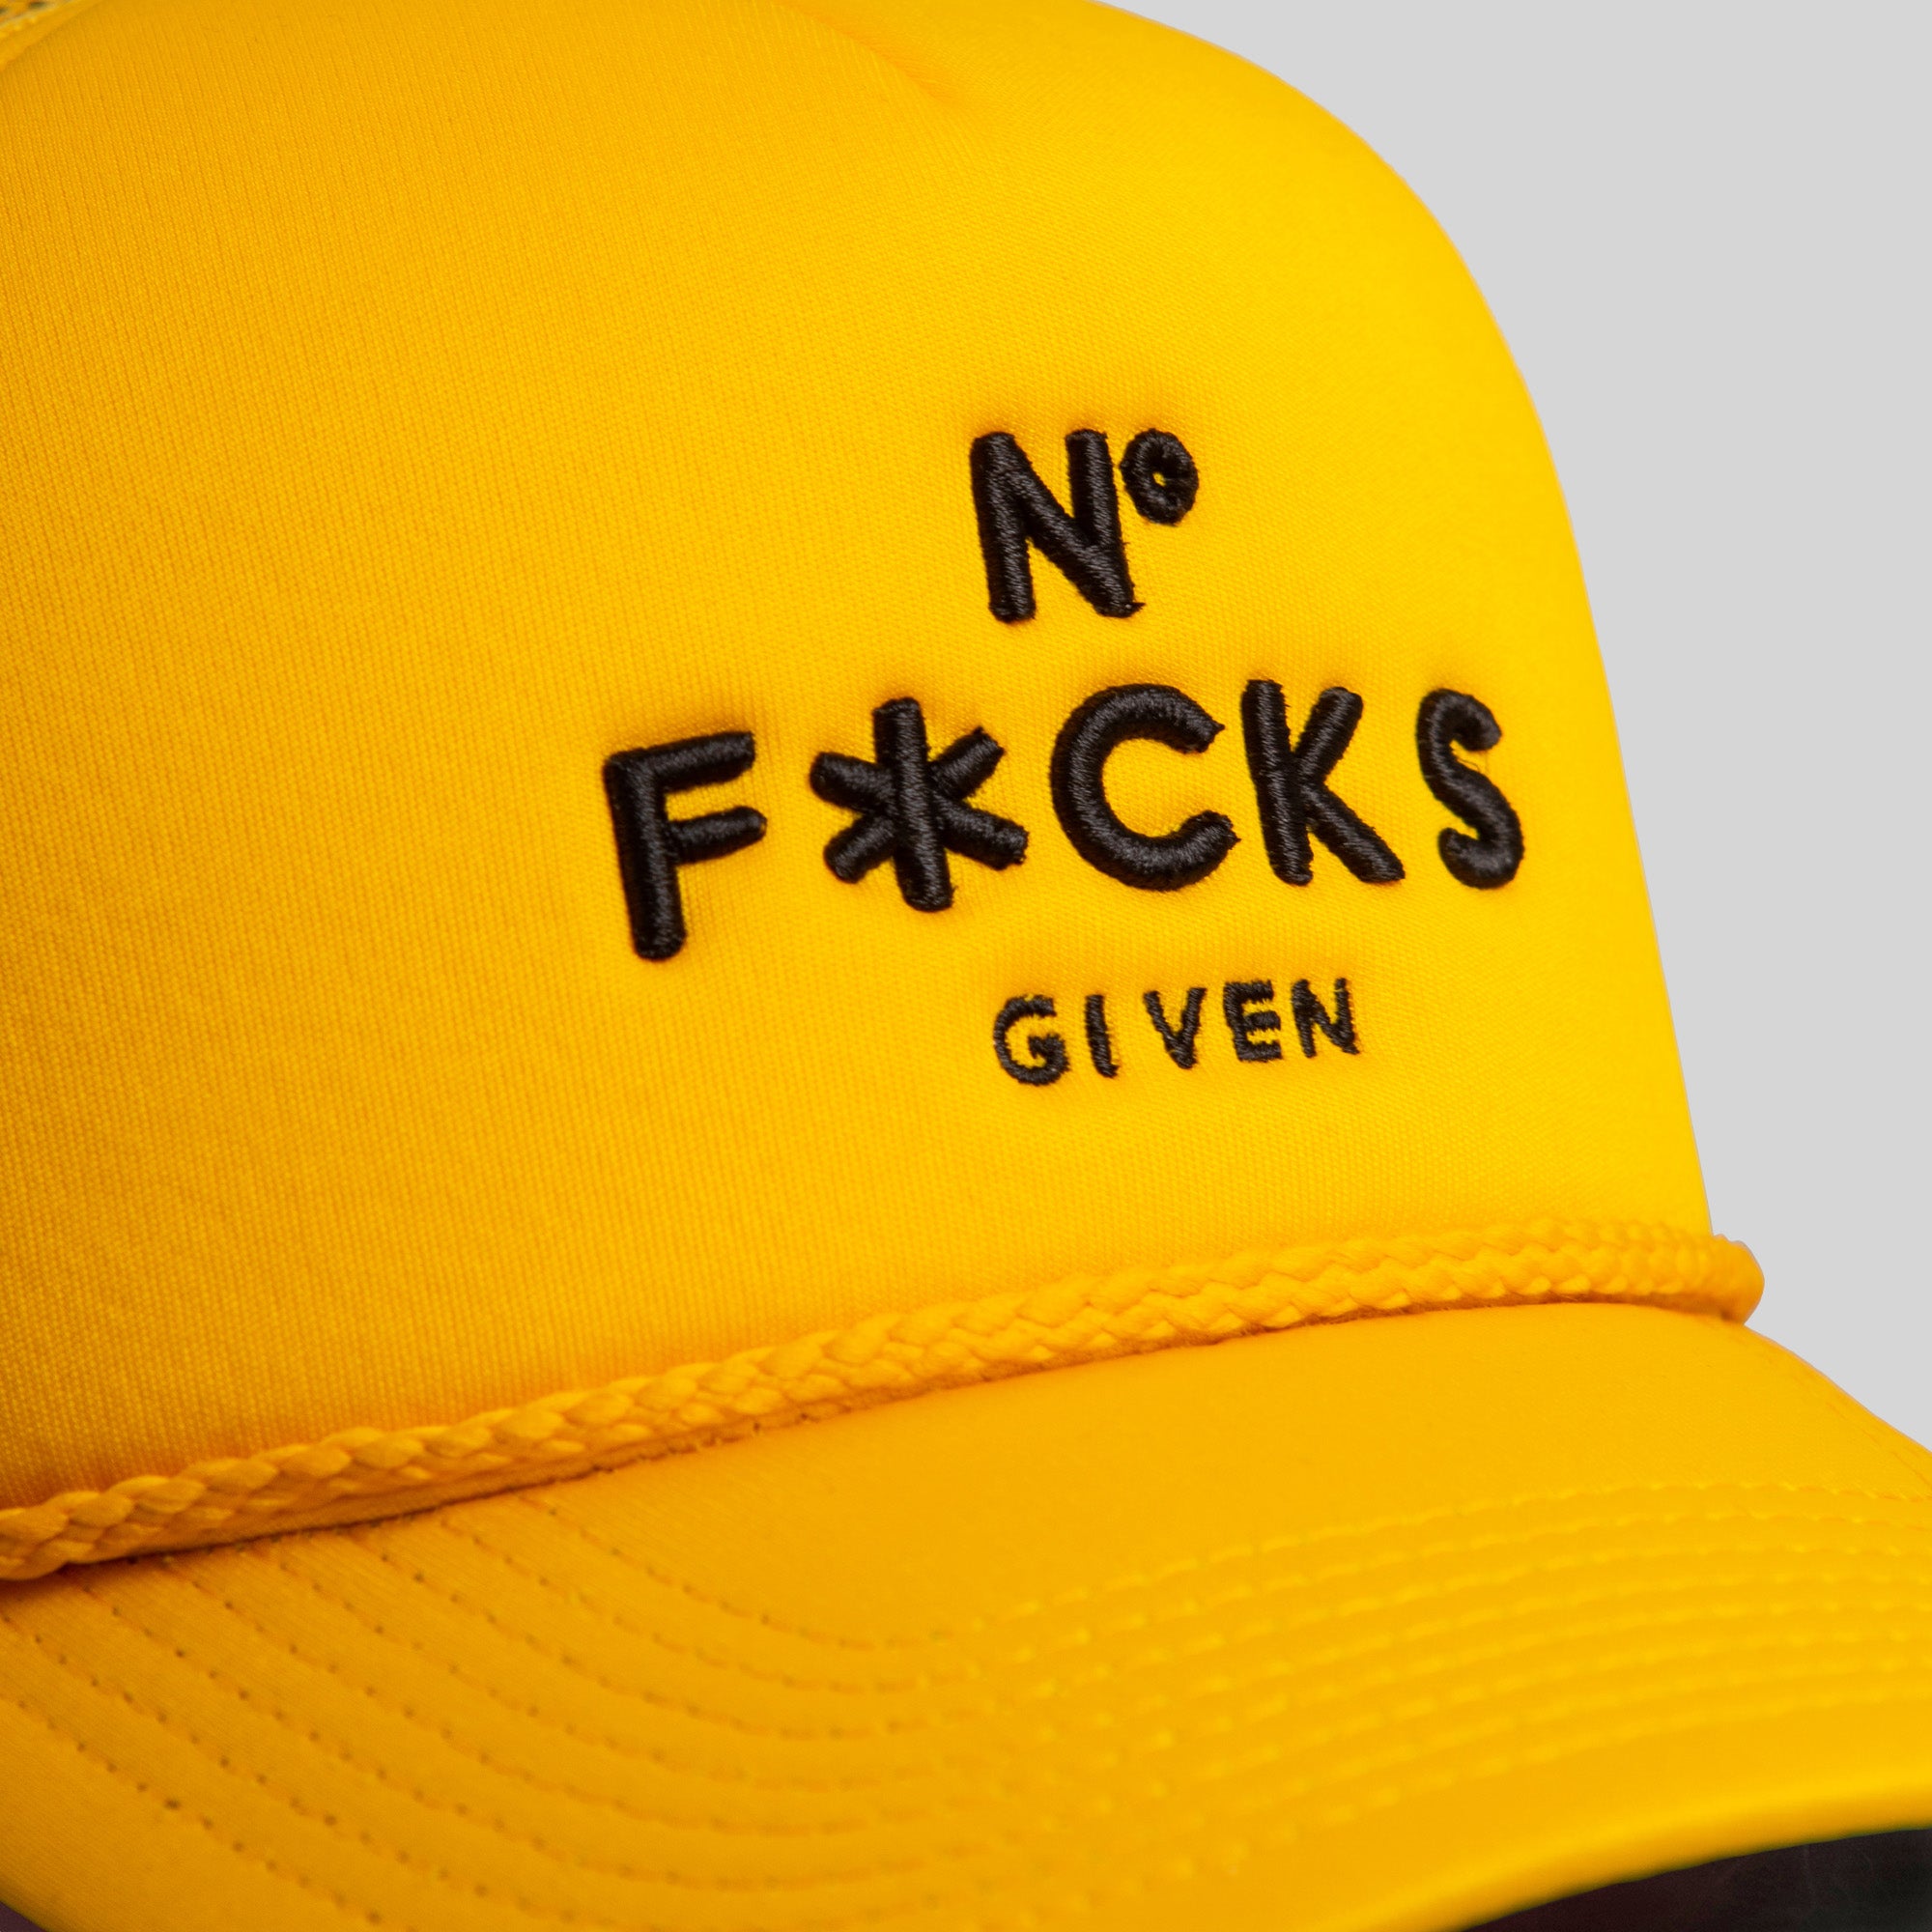 NO F*CKS GIVEN YELLOW TRUCKER HAT